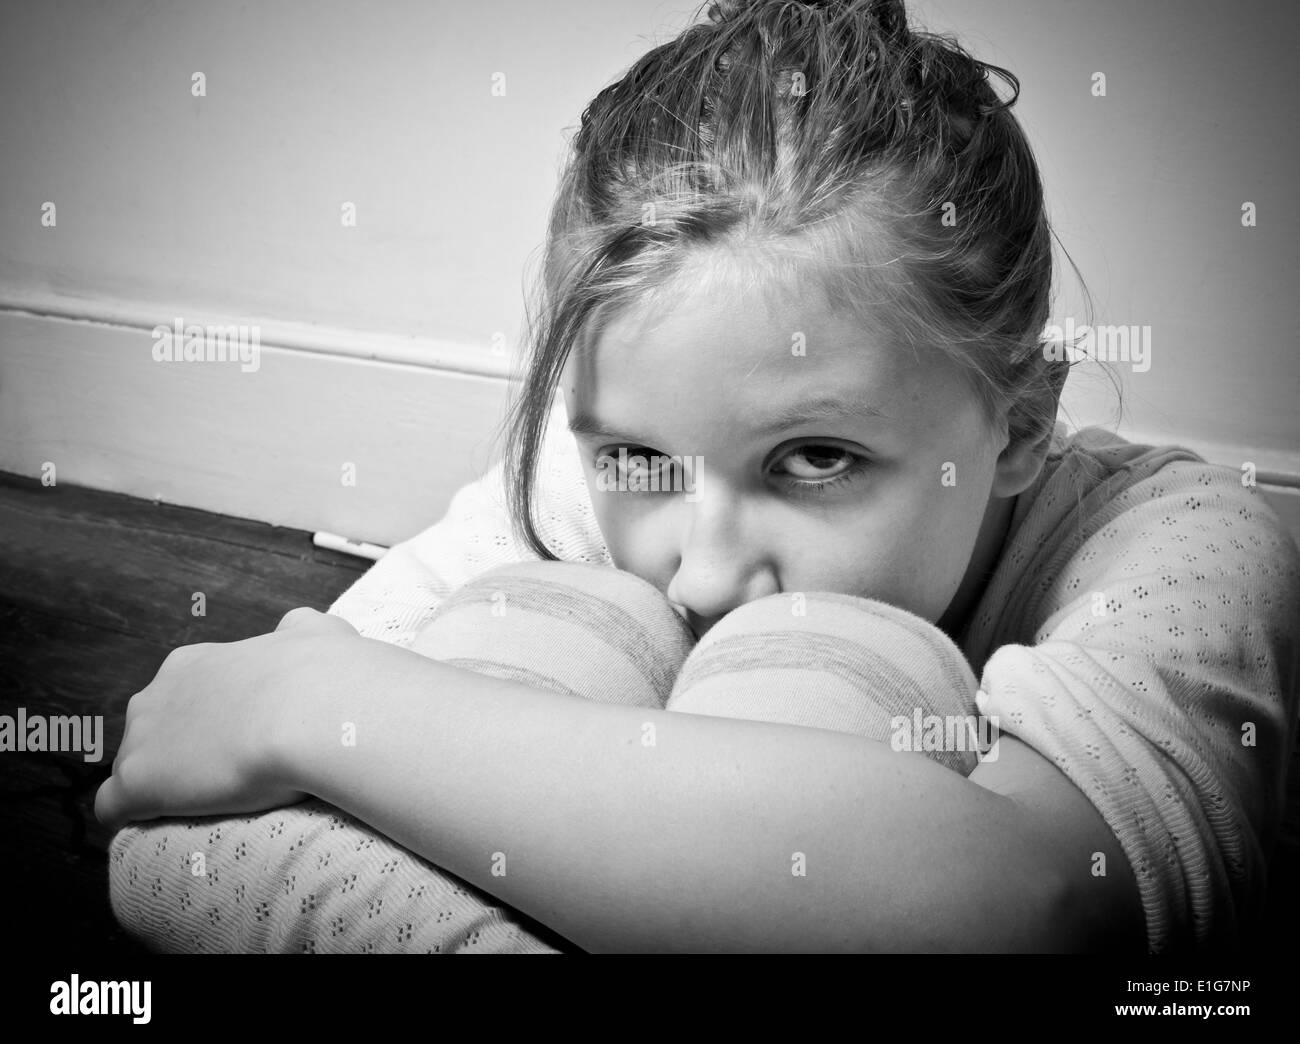 Sad and depressed child Stock Photo